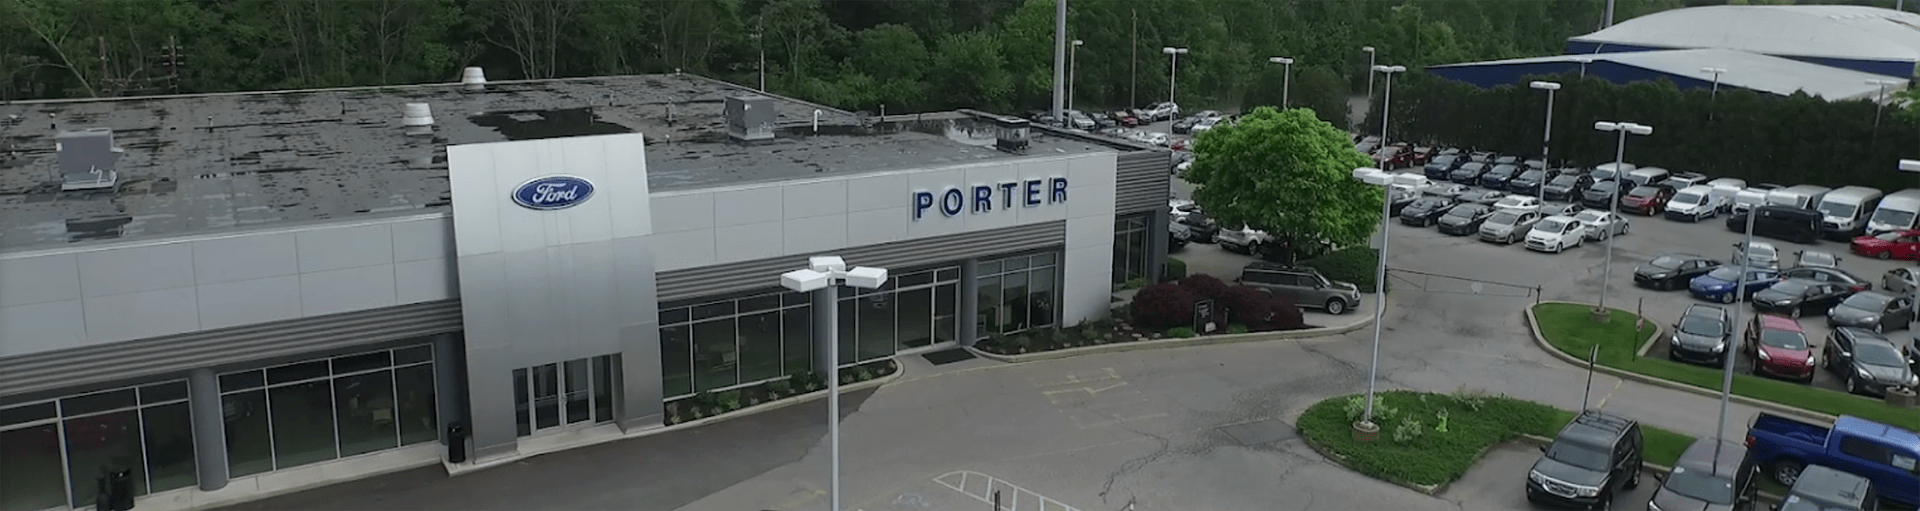 Porter Ford Oil Change Services